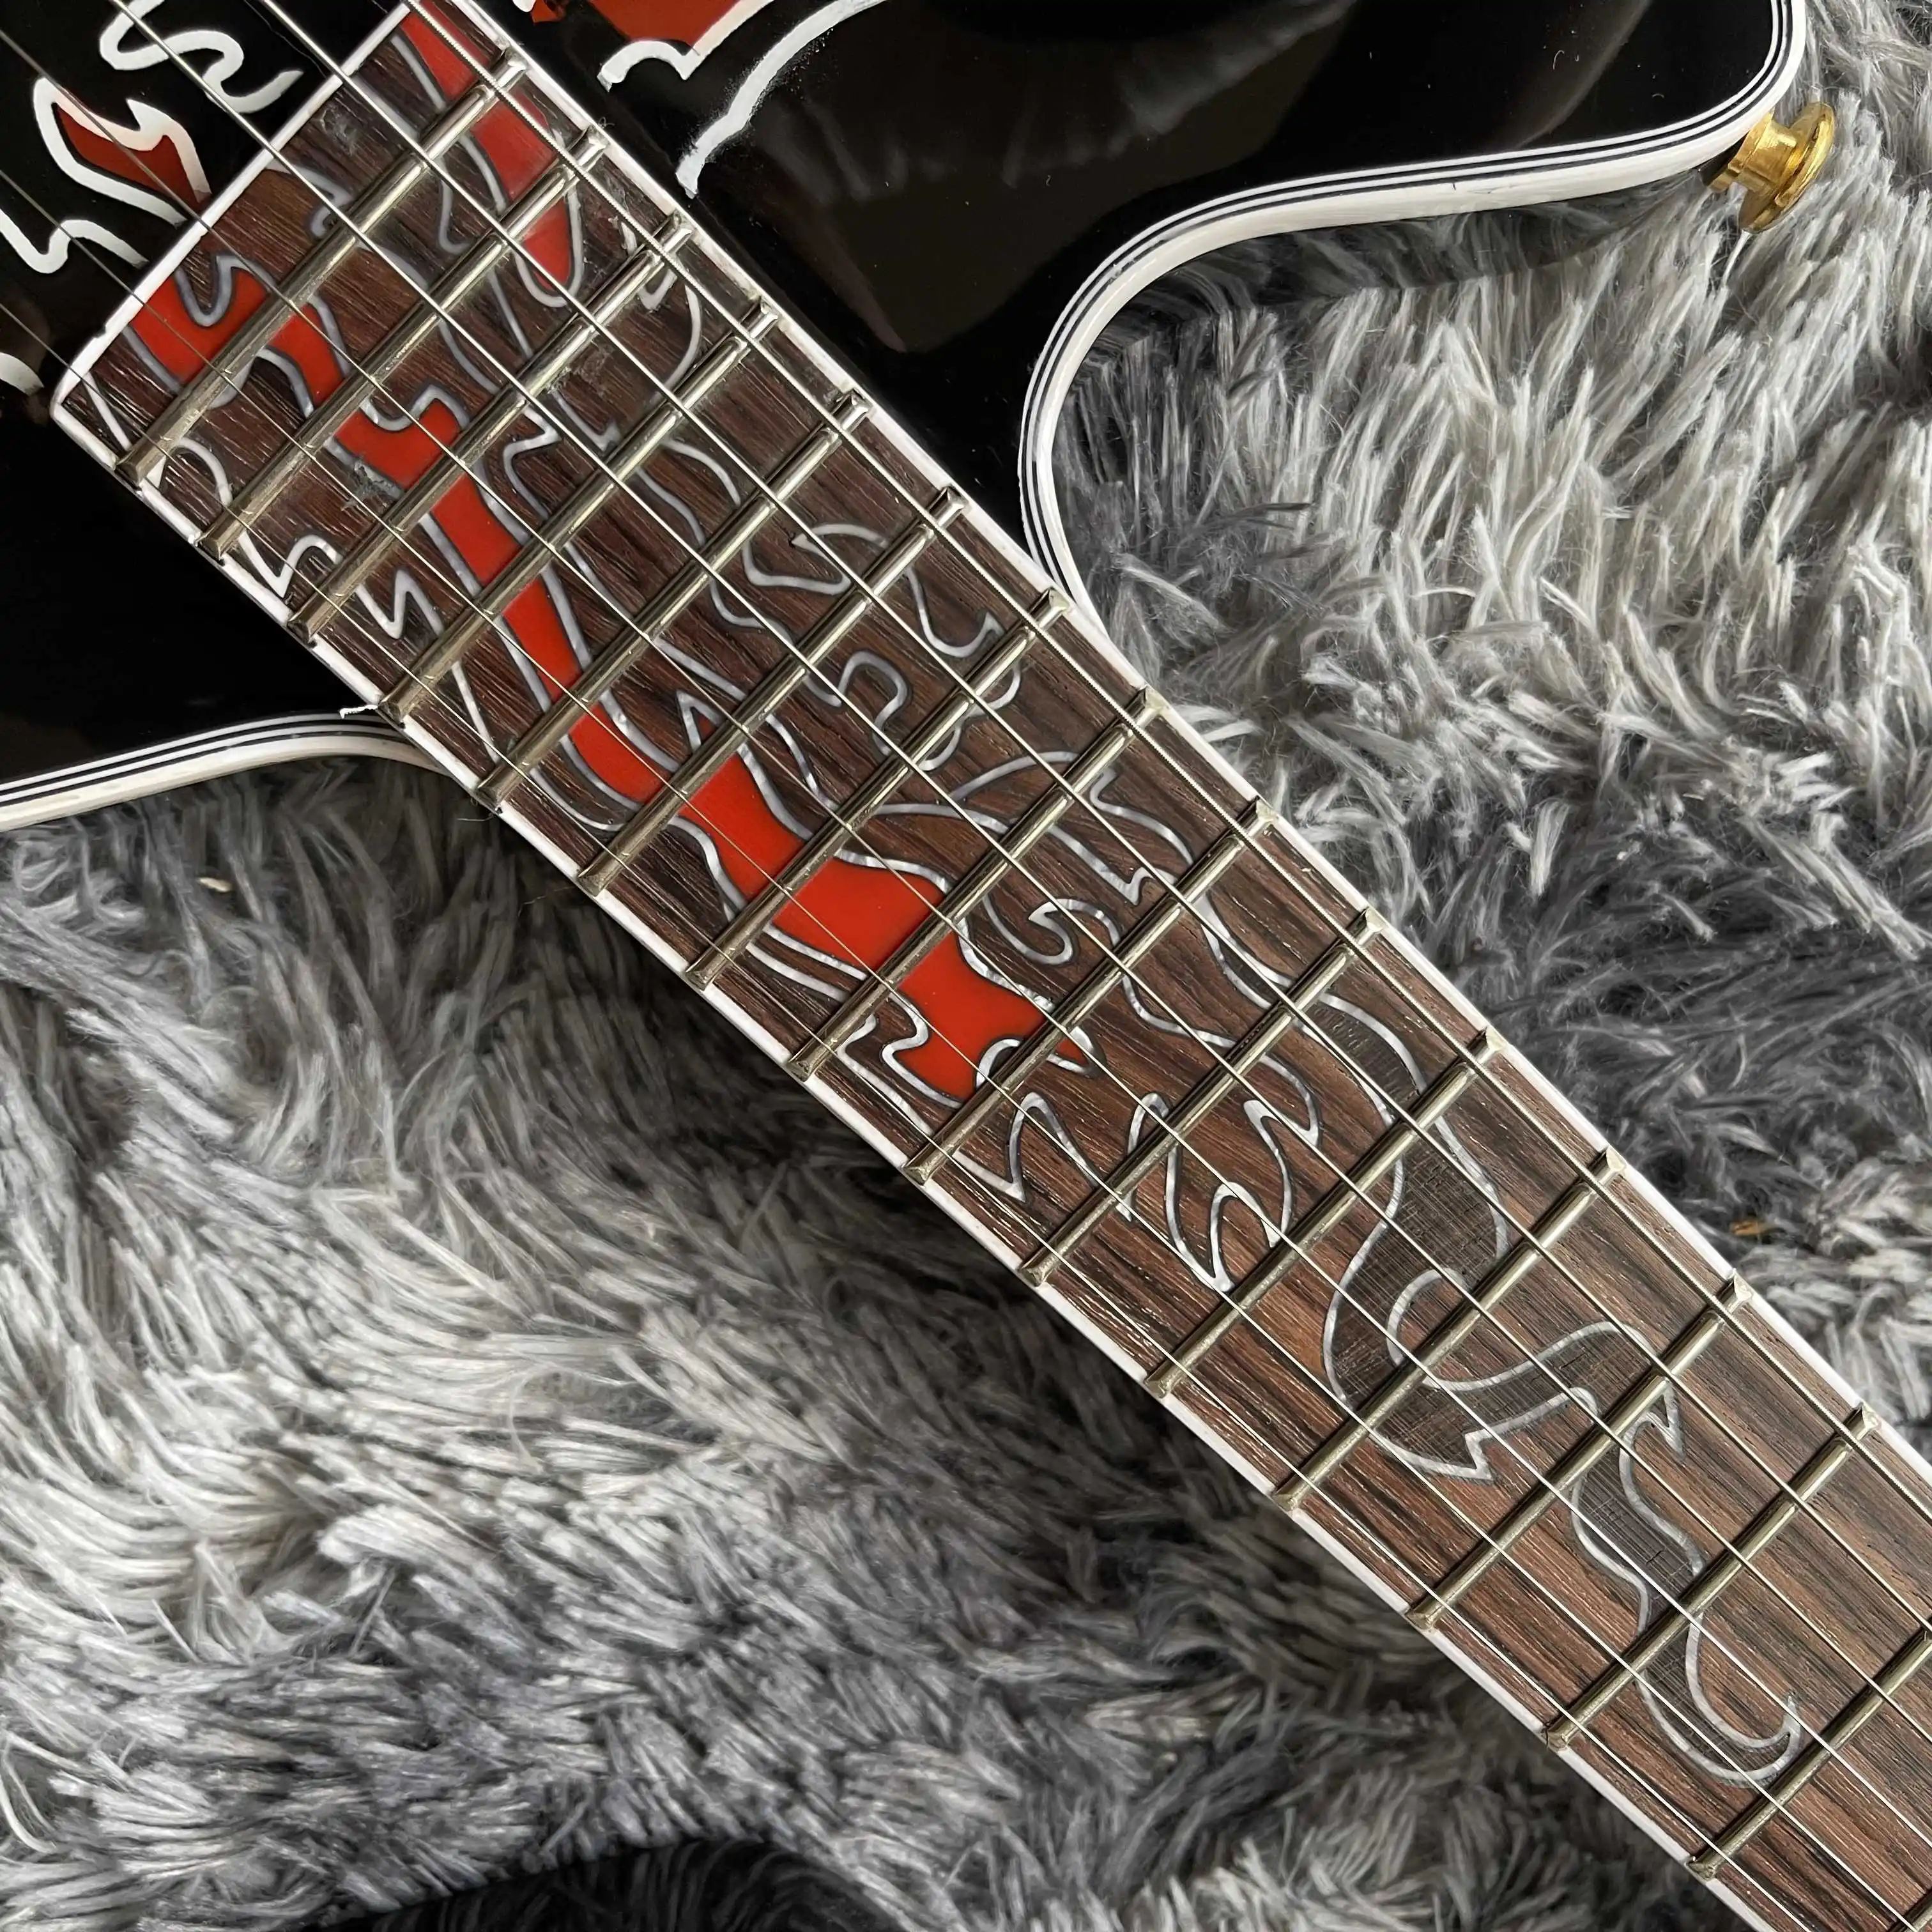 Guitarra eletrica Kawaii para colorir by PoccnnIndustriesPT on DeviantArt